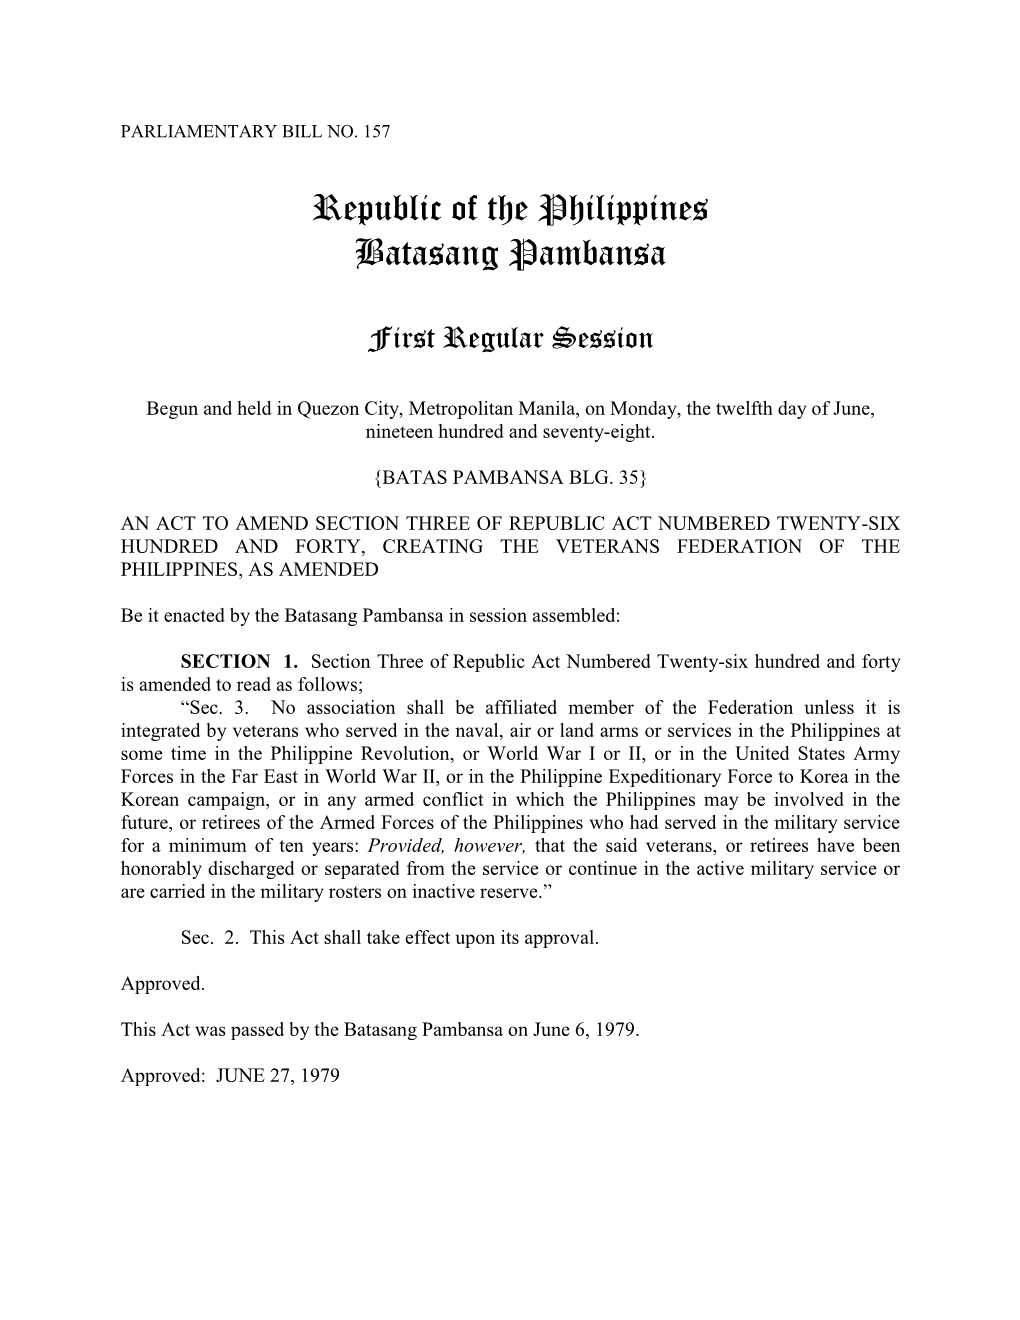 Republic of the Philippines Batasang Pambansa